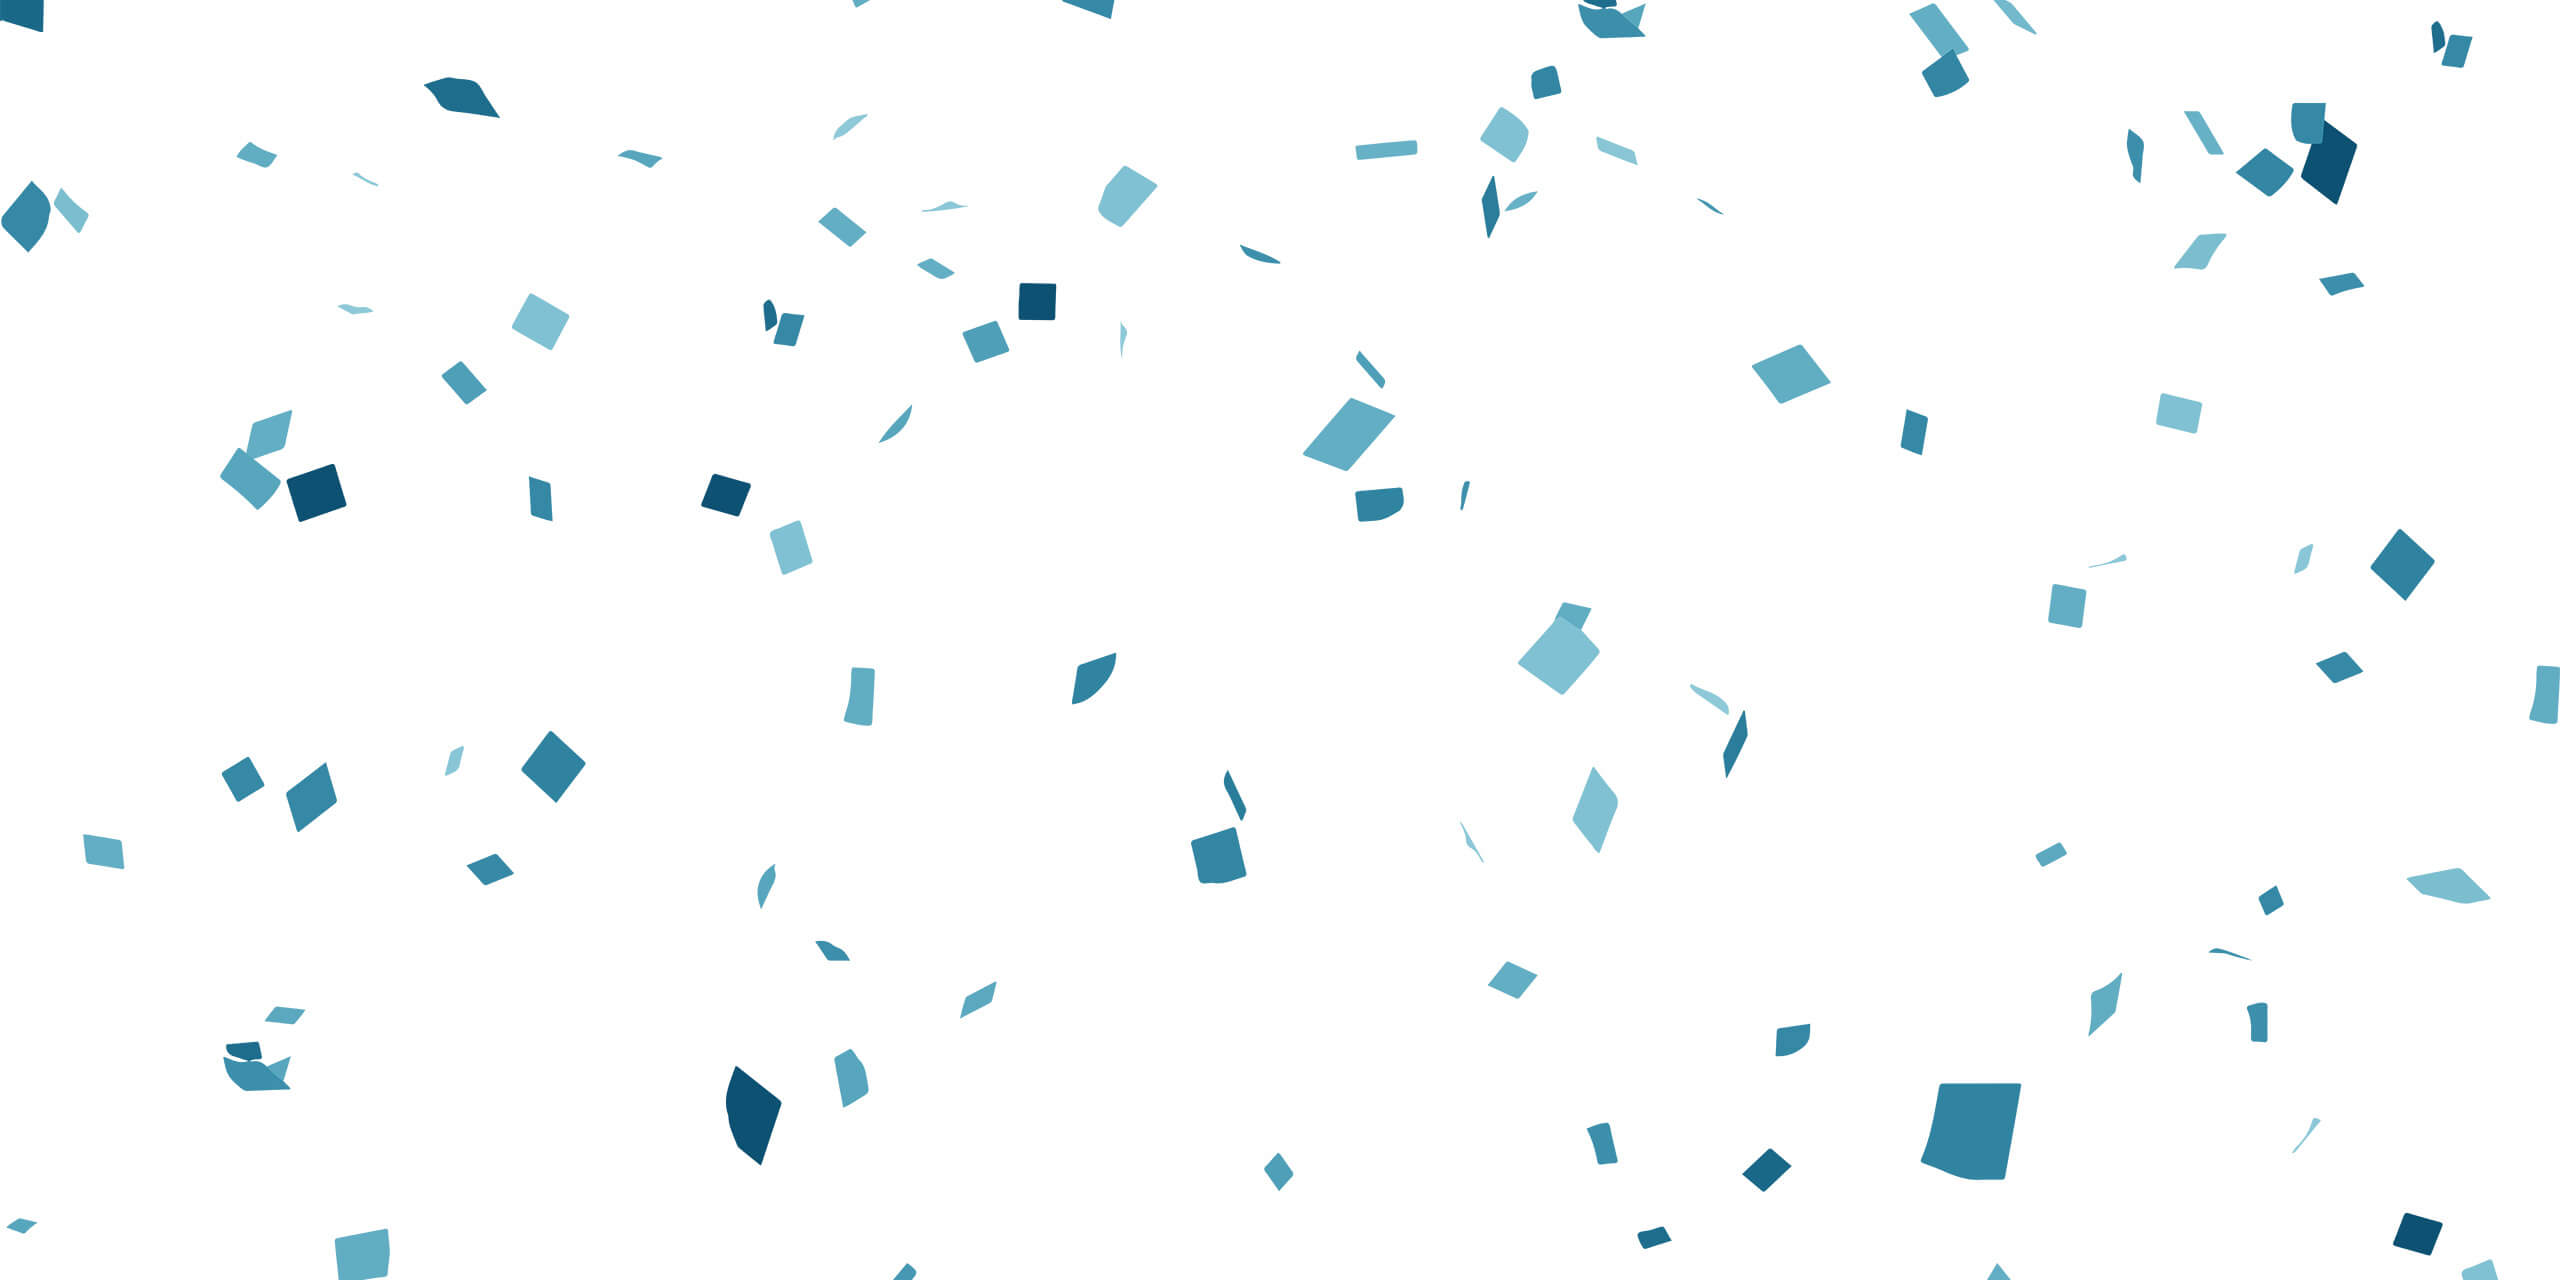 Pieces of blue confetti falling